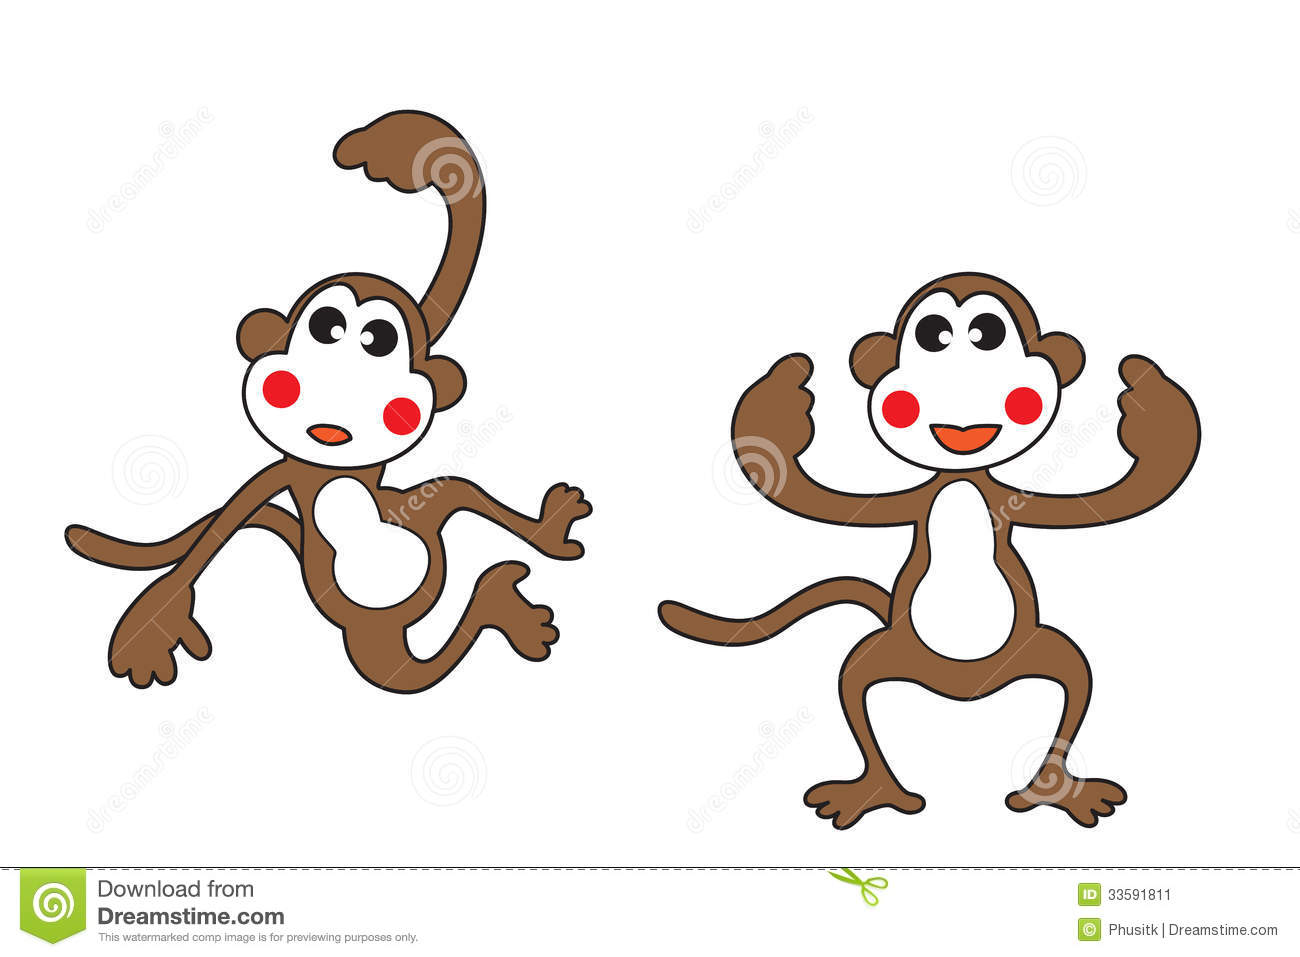 The 2 Cute Monkey Clipart 